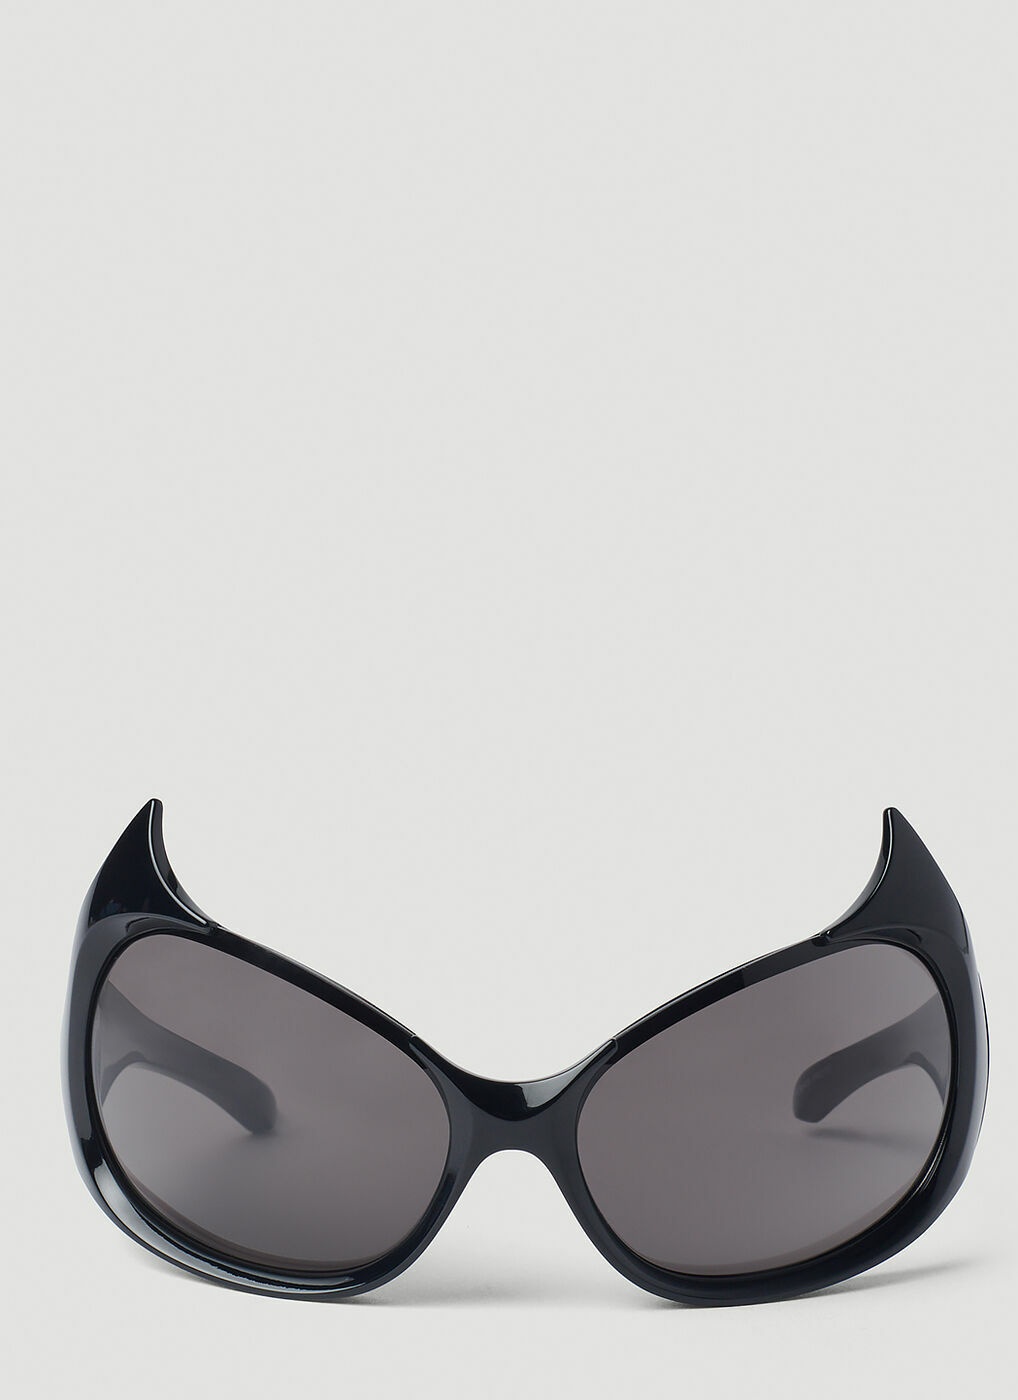 Balenciaga - Gotham Cat Sunglasses in Black Balenciaga